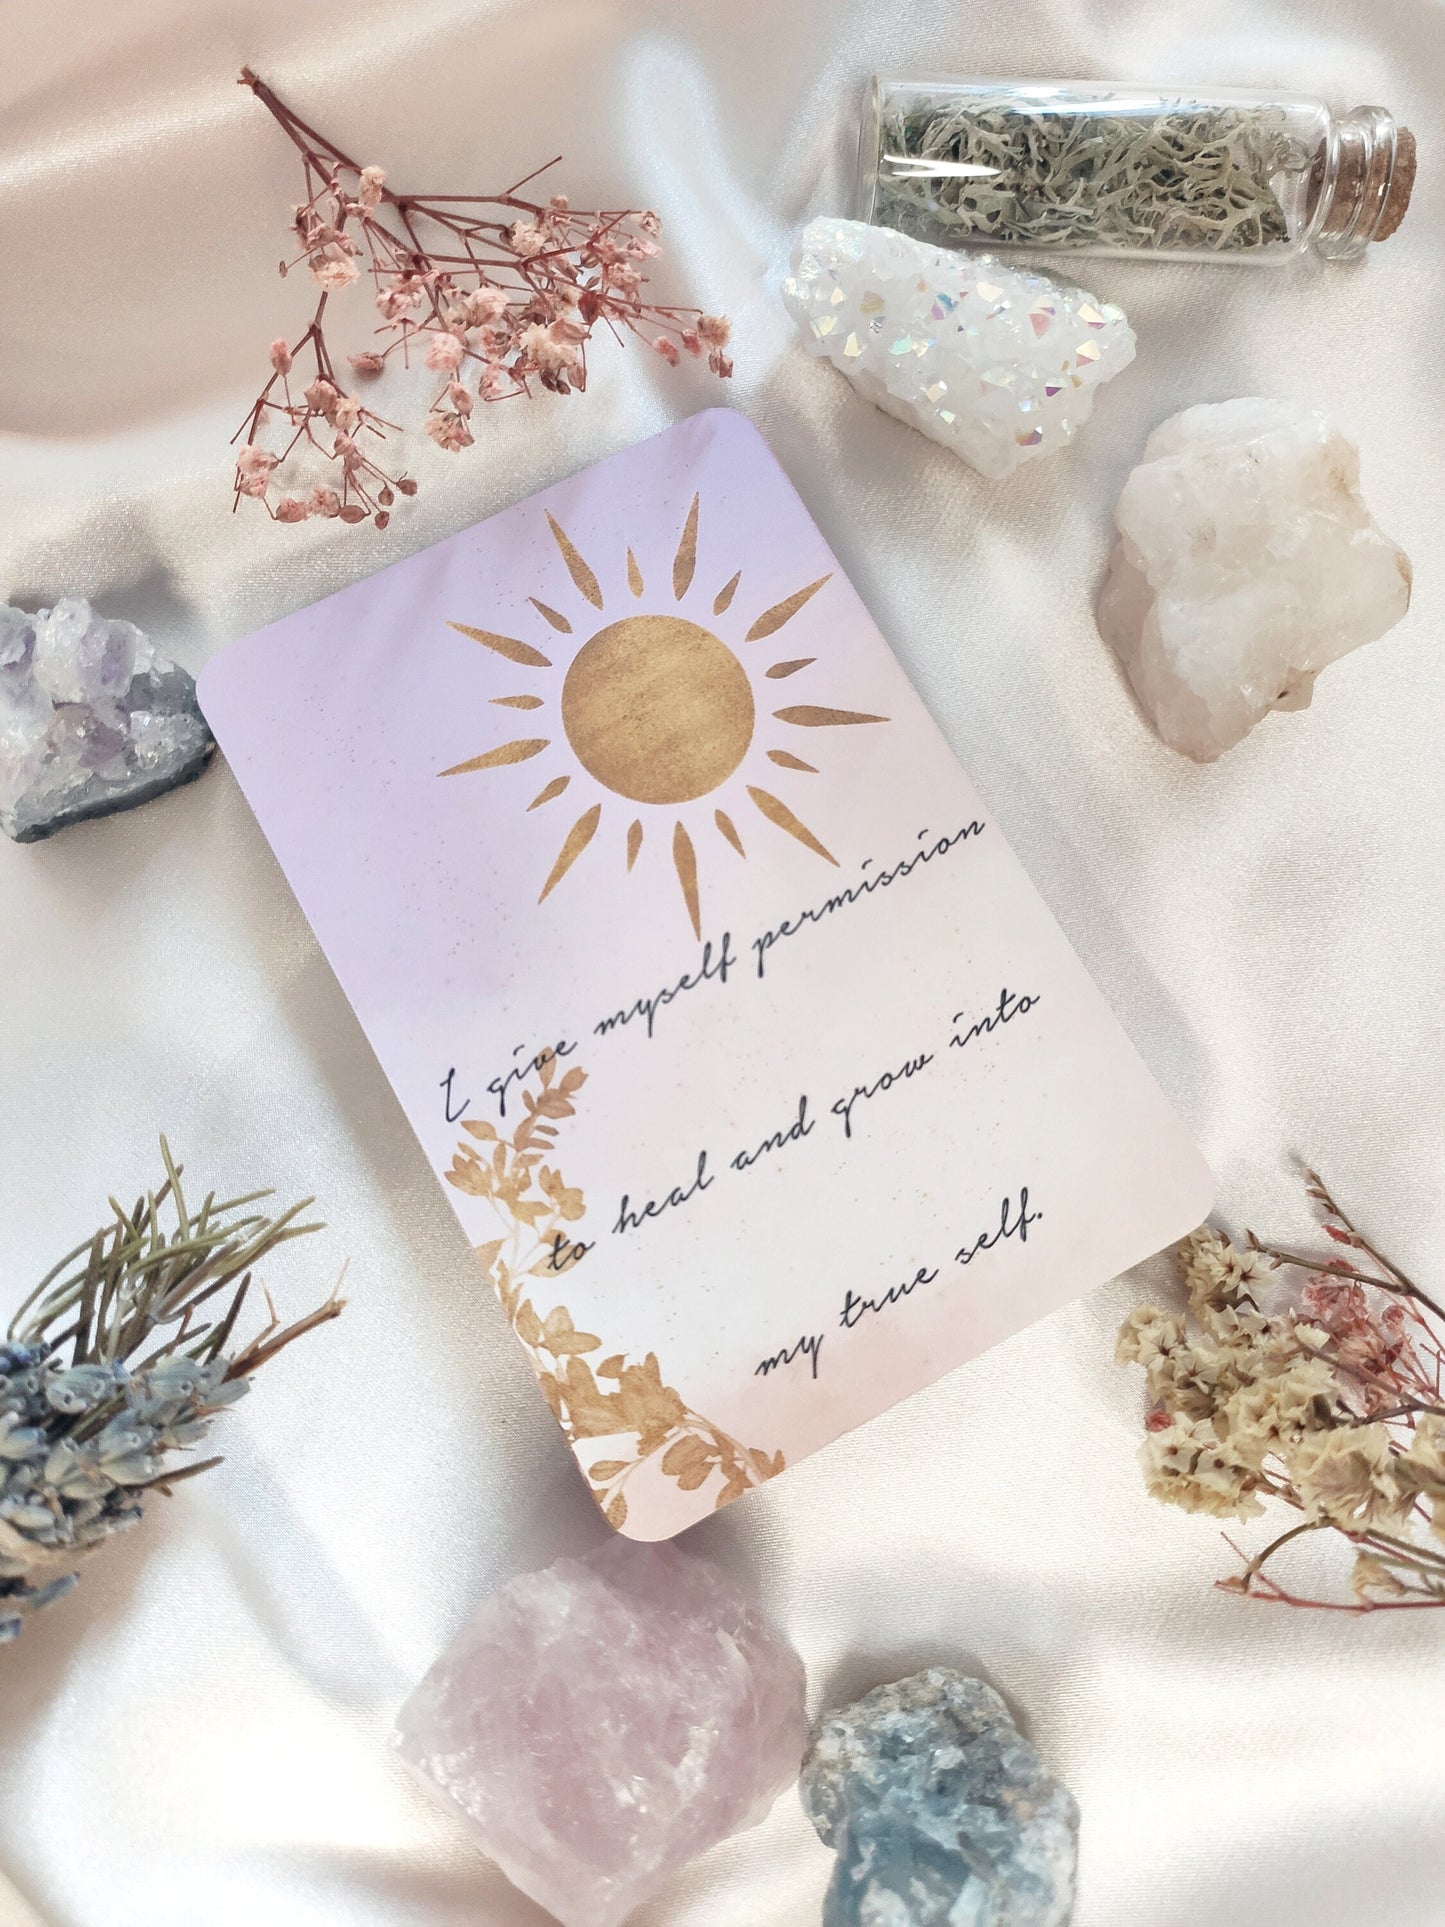 32 Handmade Enchanted Affirmation Cards